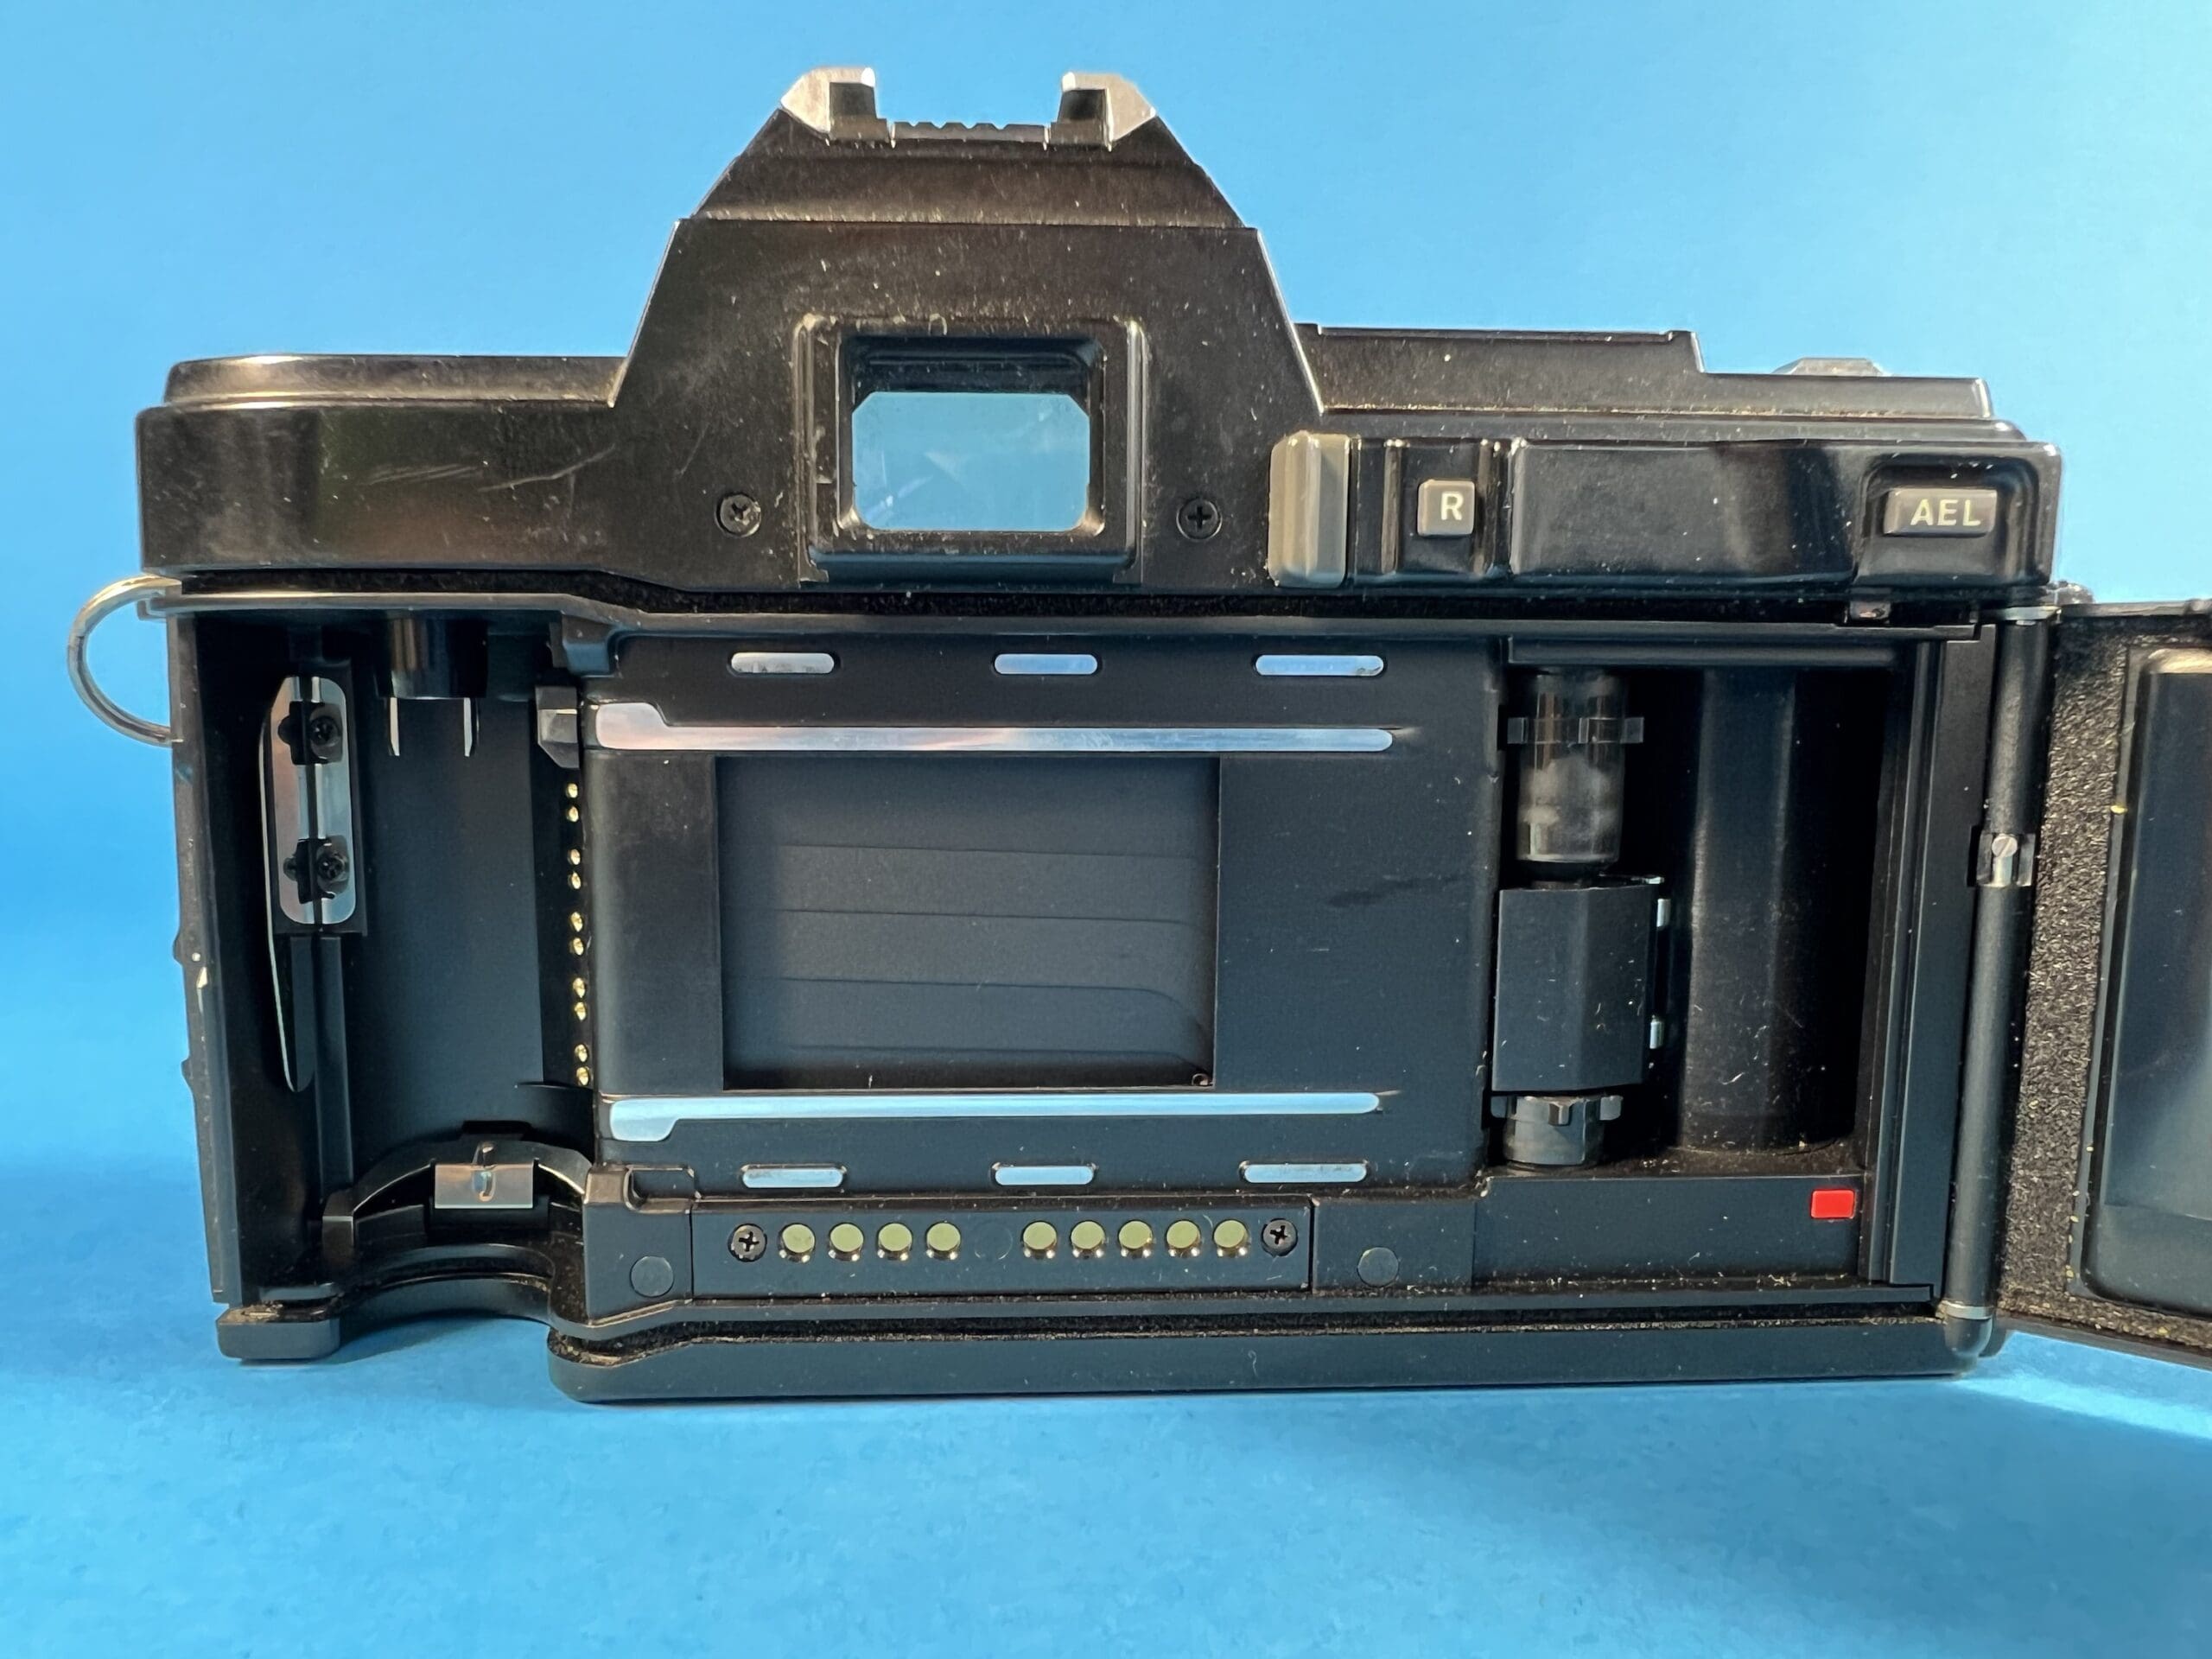 Minolta Maxxum 7000 35mm Film SLR Camera (Parts or Repair) - Black 